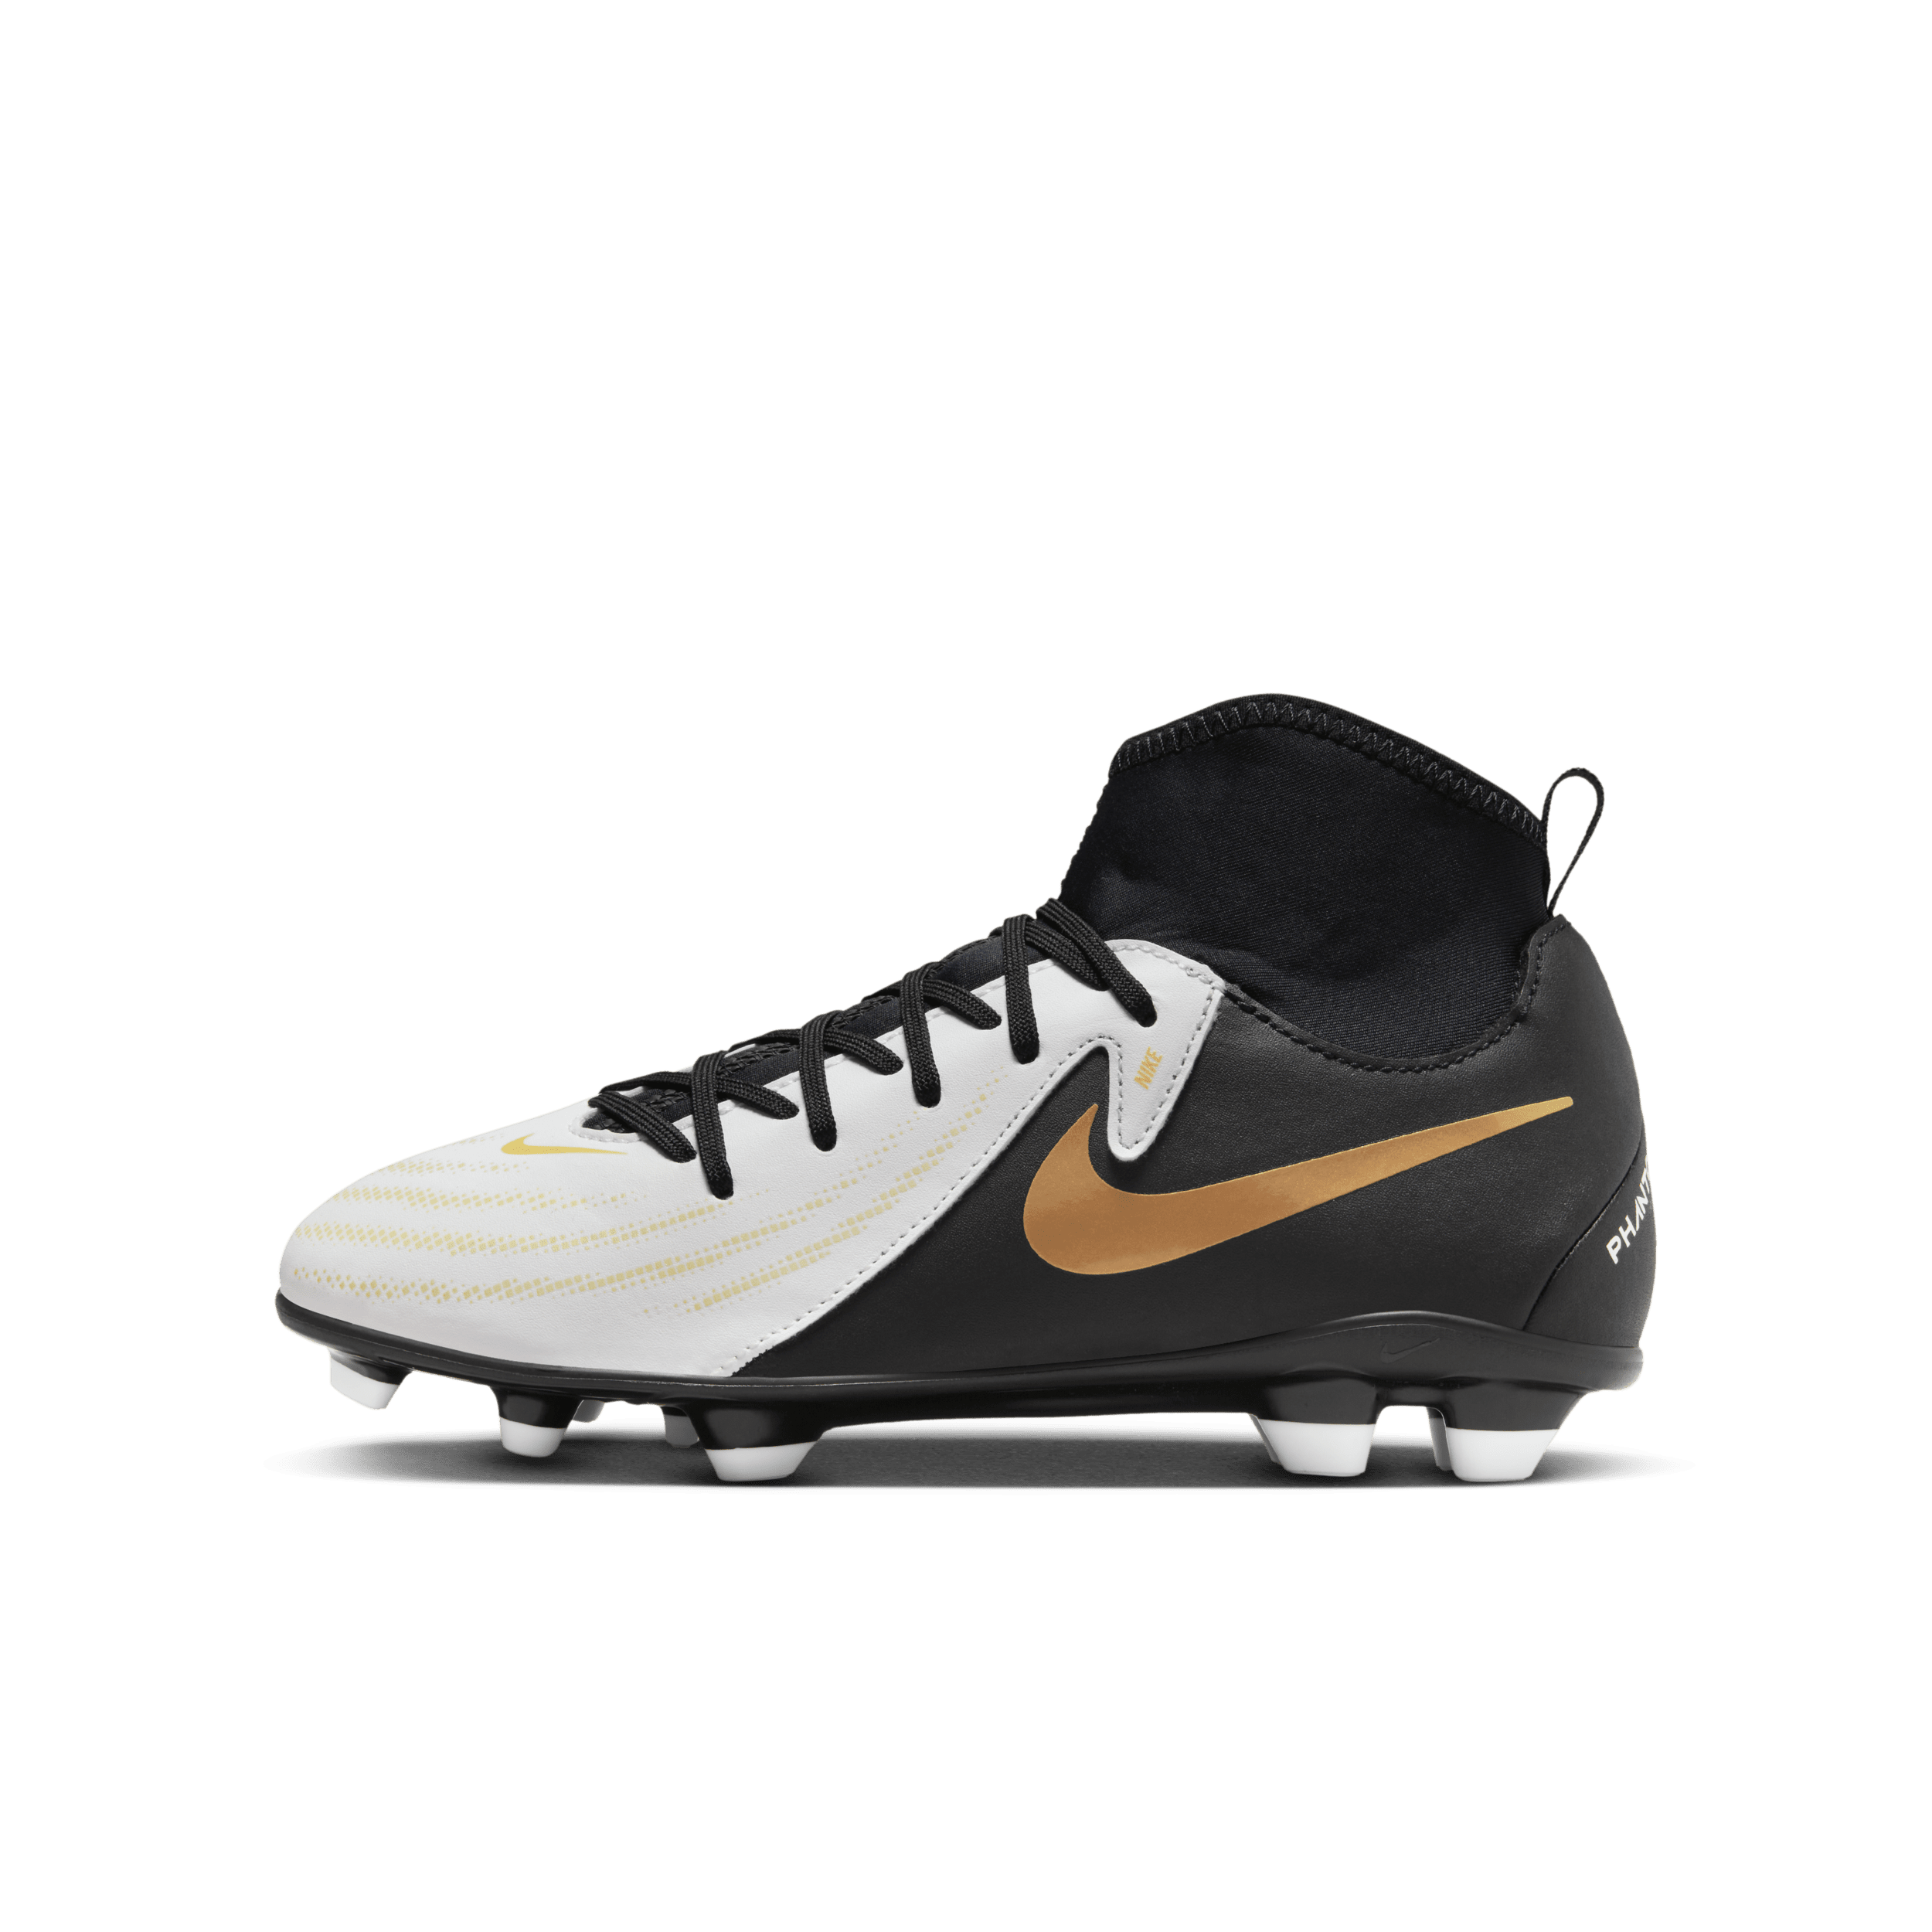 Scarpa da calcio a taglio alto MG Nike Jr. Phantom Luna 2 Club – Bambini/Ragazzi - Bianco